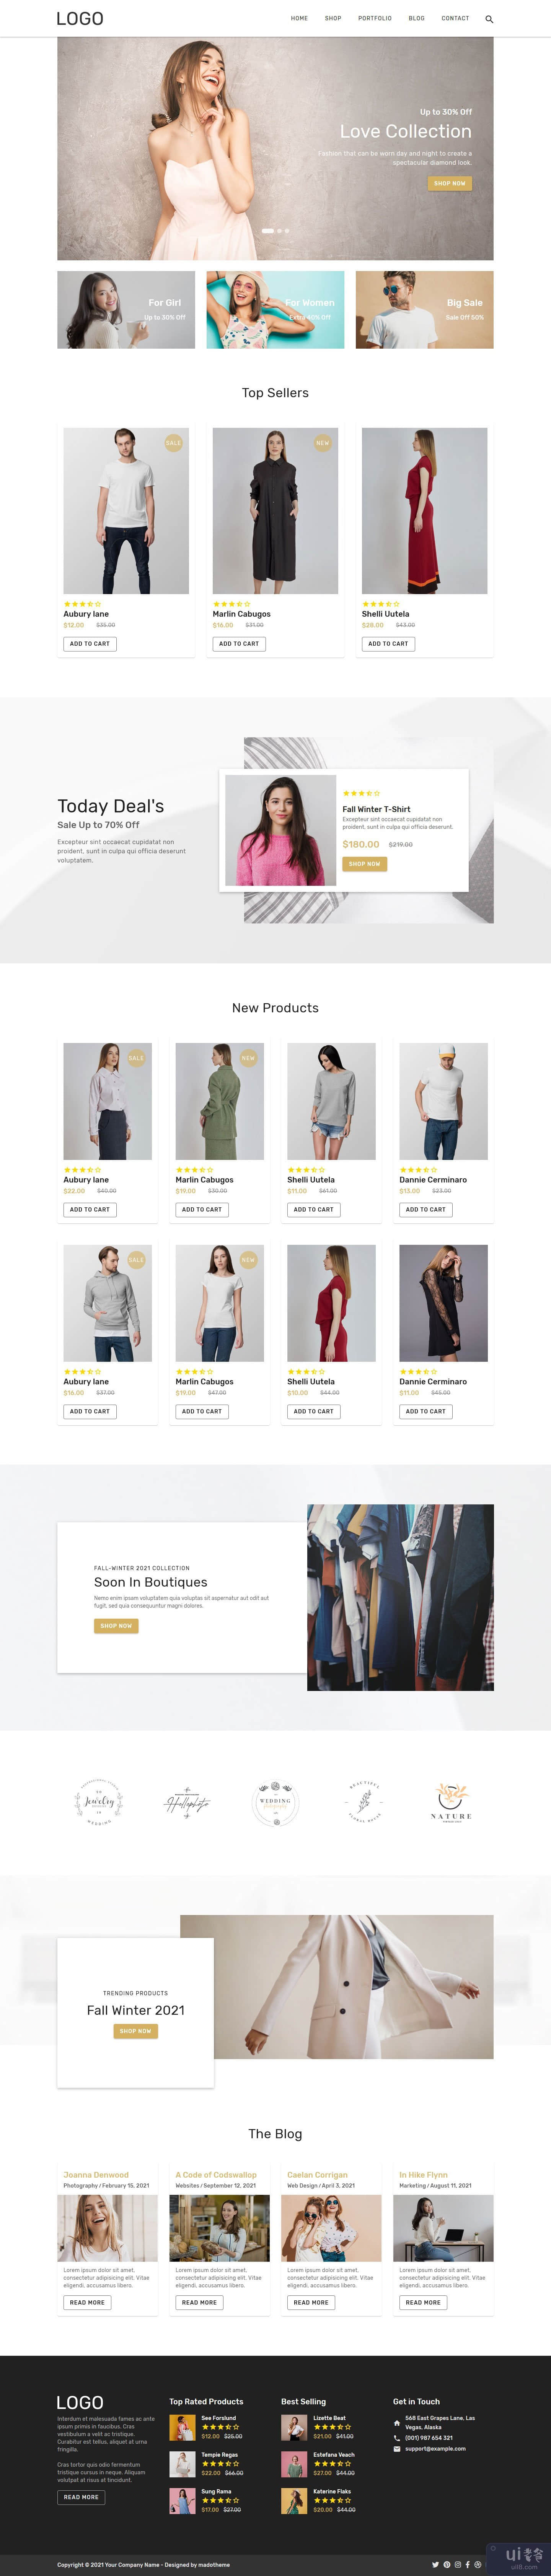 Ketzu 时装店 HTML 网页模板 V1.0(Ketzu Fashion Store HTML Web Template V1.0)插图